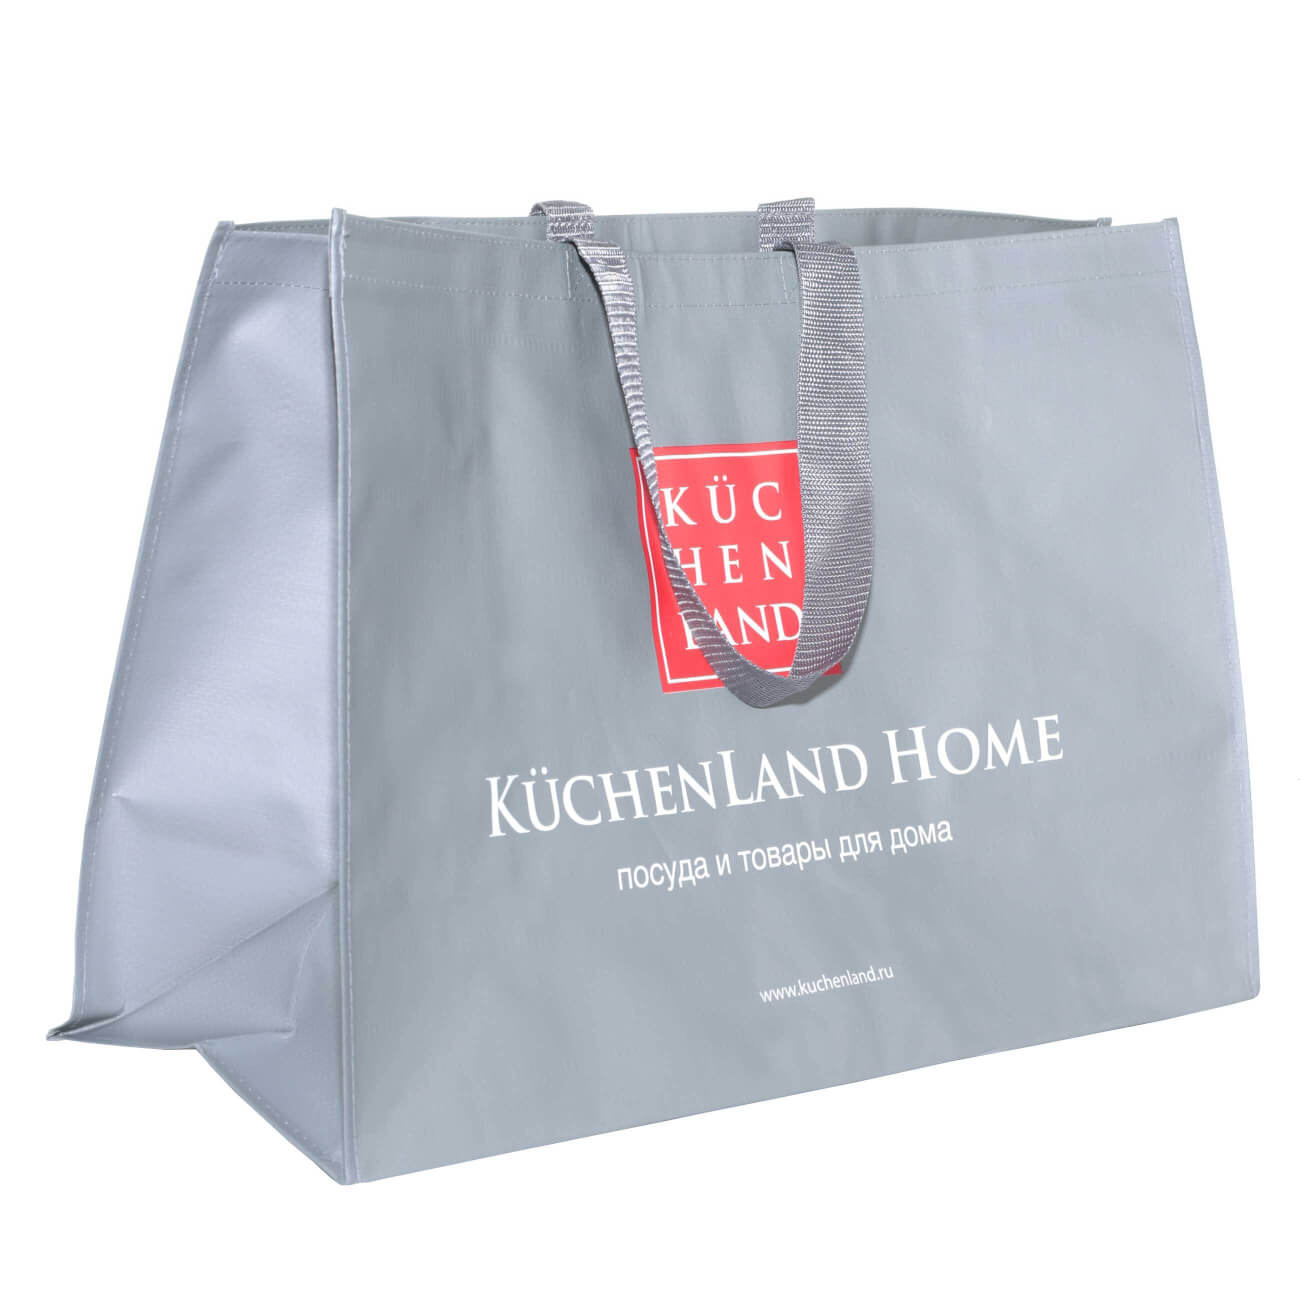 Сумка-шоппер, 60х40 см, серая, Kuchenland, Basic сумка переноска мини 25 х 21 х 16 см серая